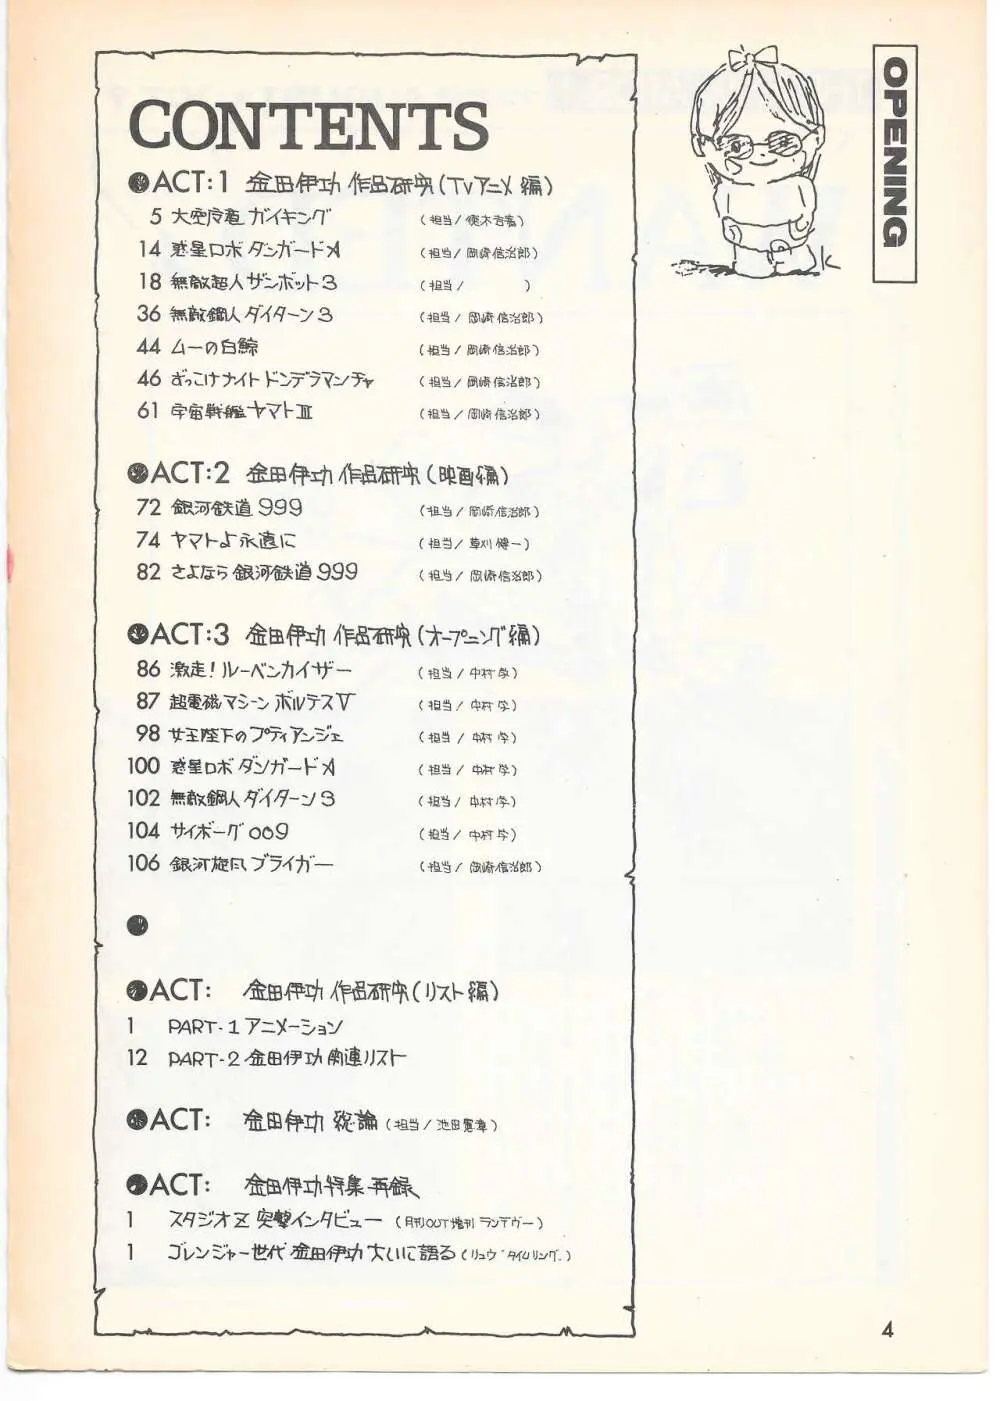 THE ANIMATOR 1 金田伊功特集号 - page3